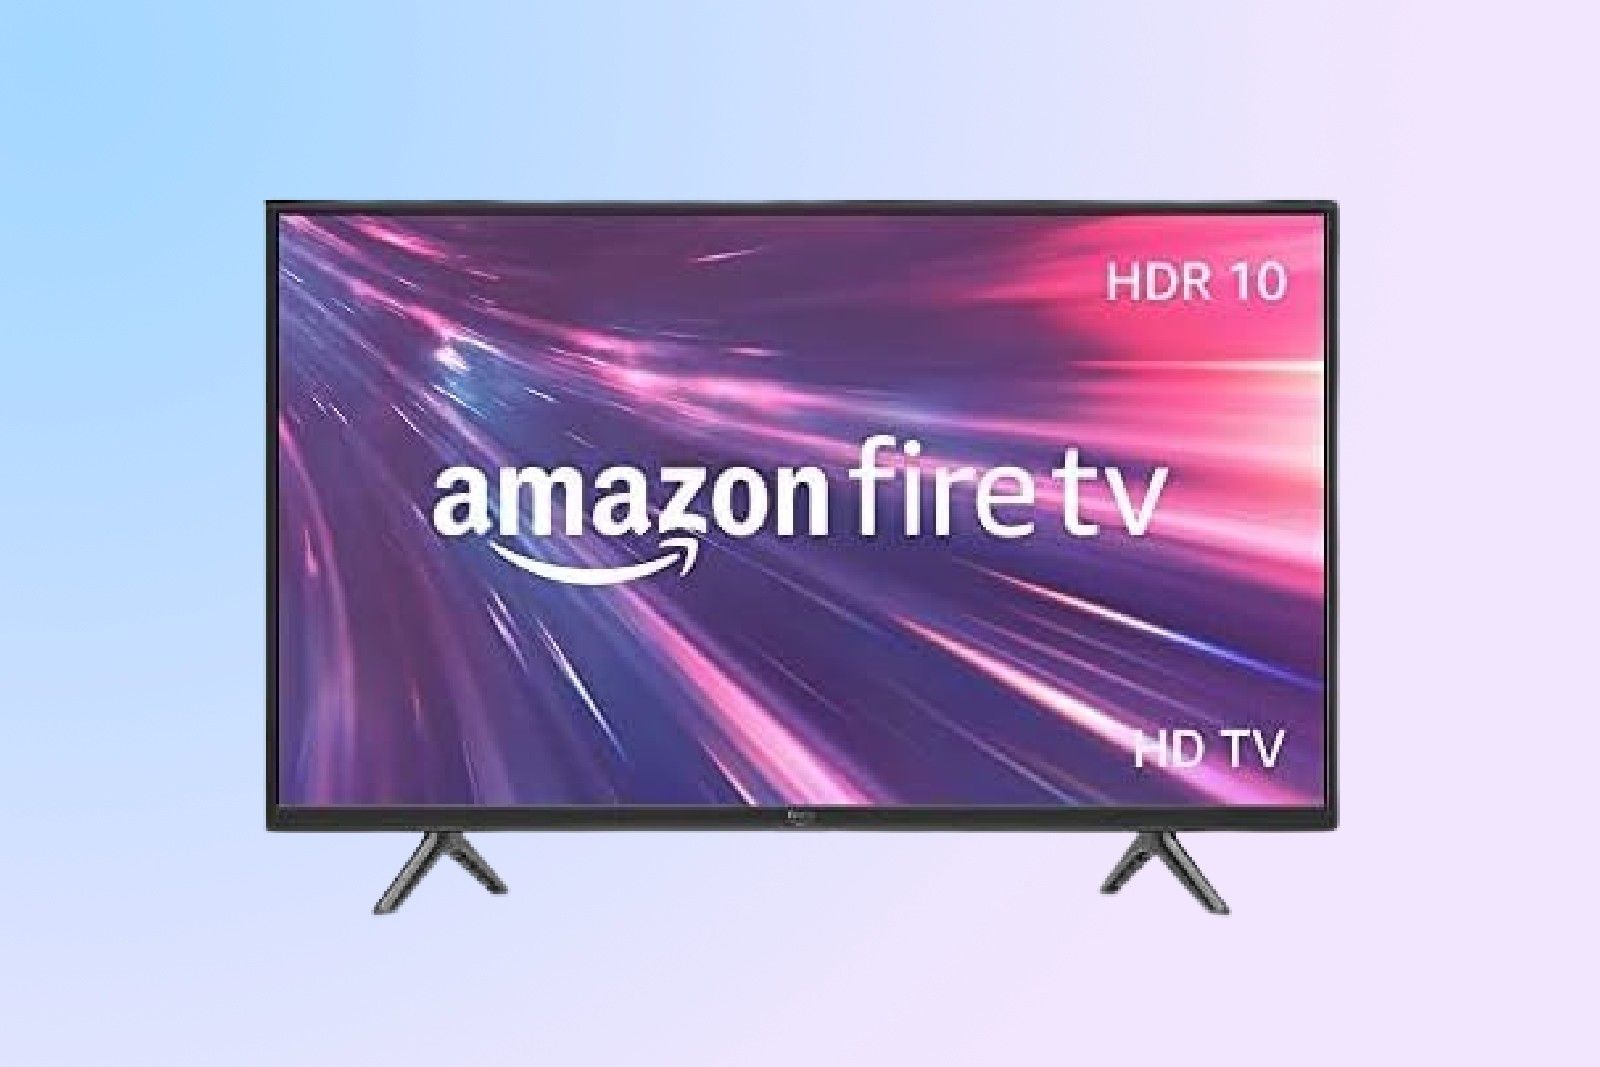 Amazon Fire TV 2-Series